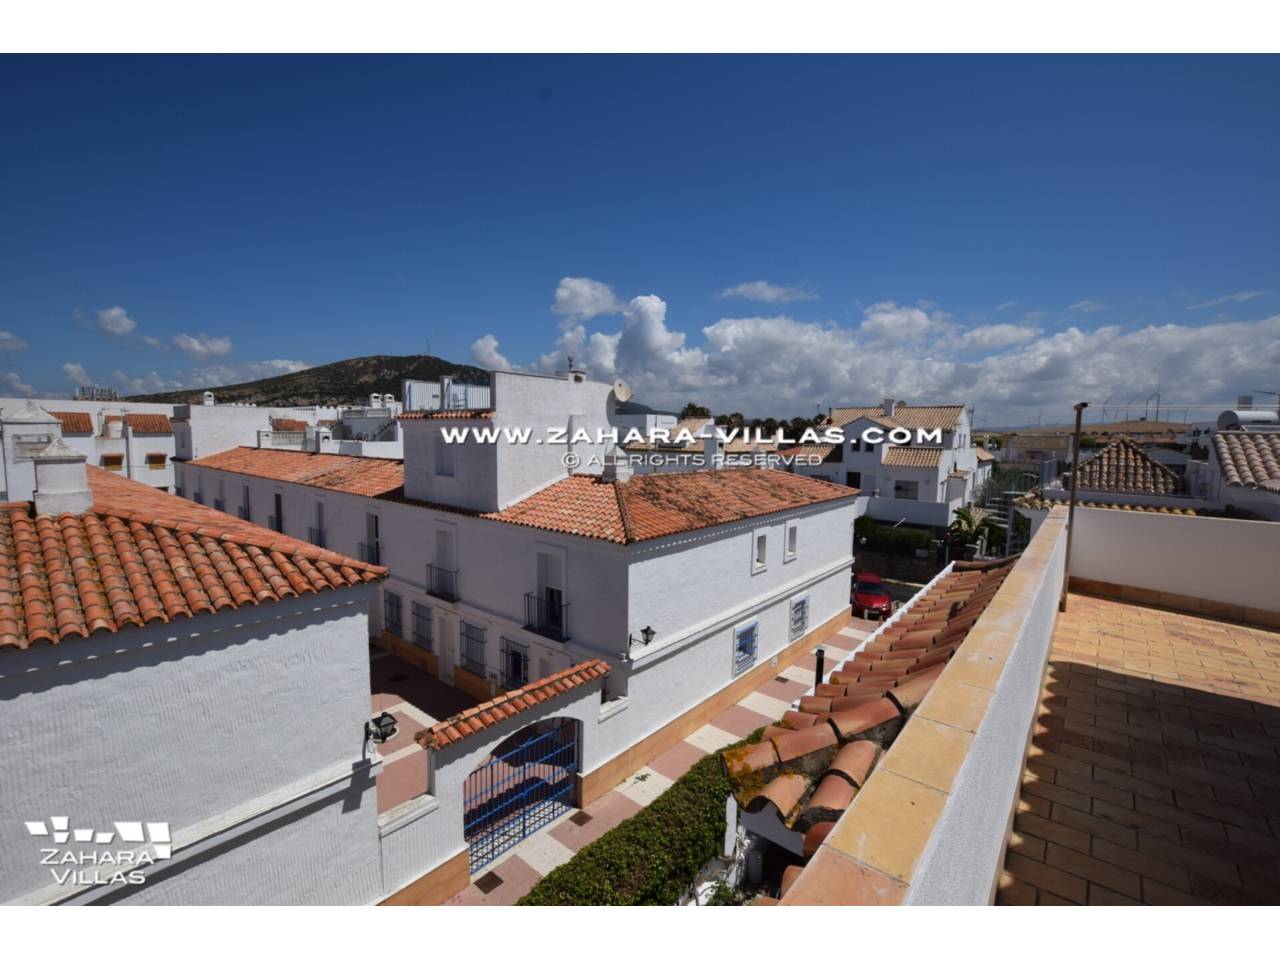 Imagen 7 de House for sale close to the beach, with sea views in Zahara de los Atunes